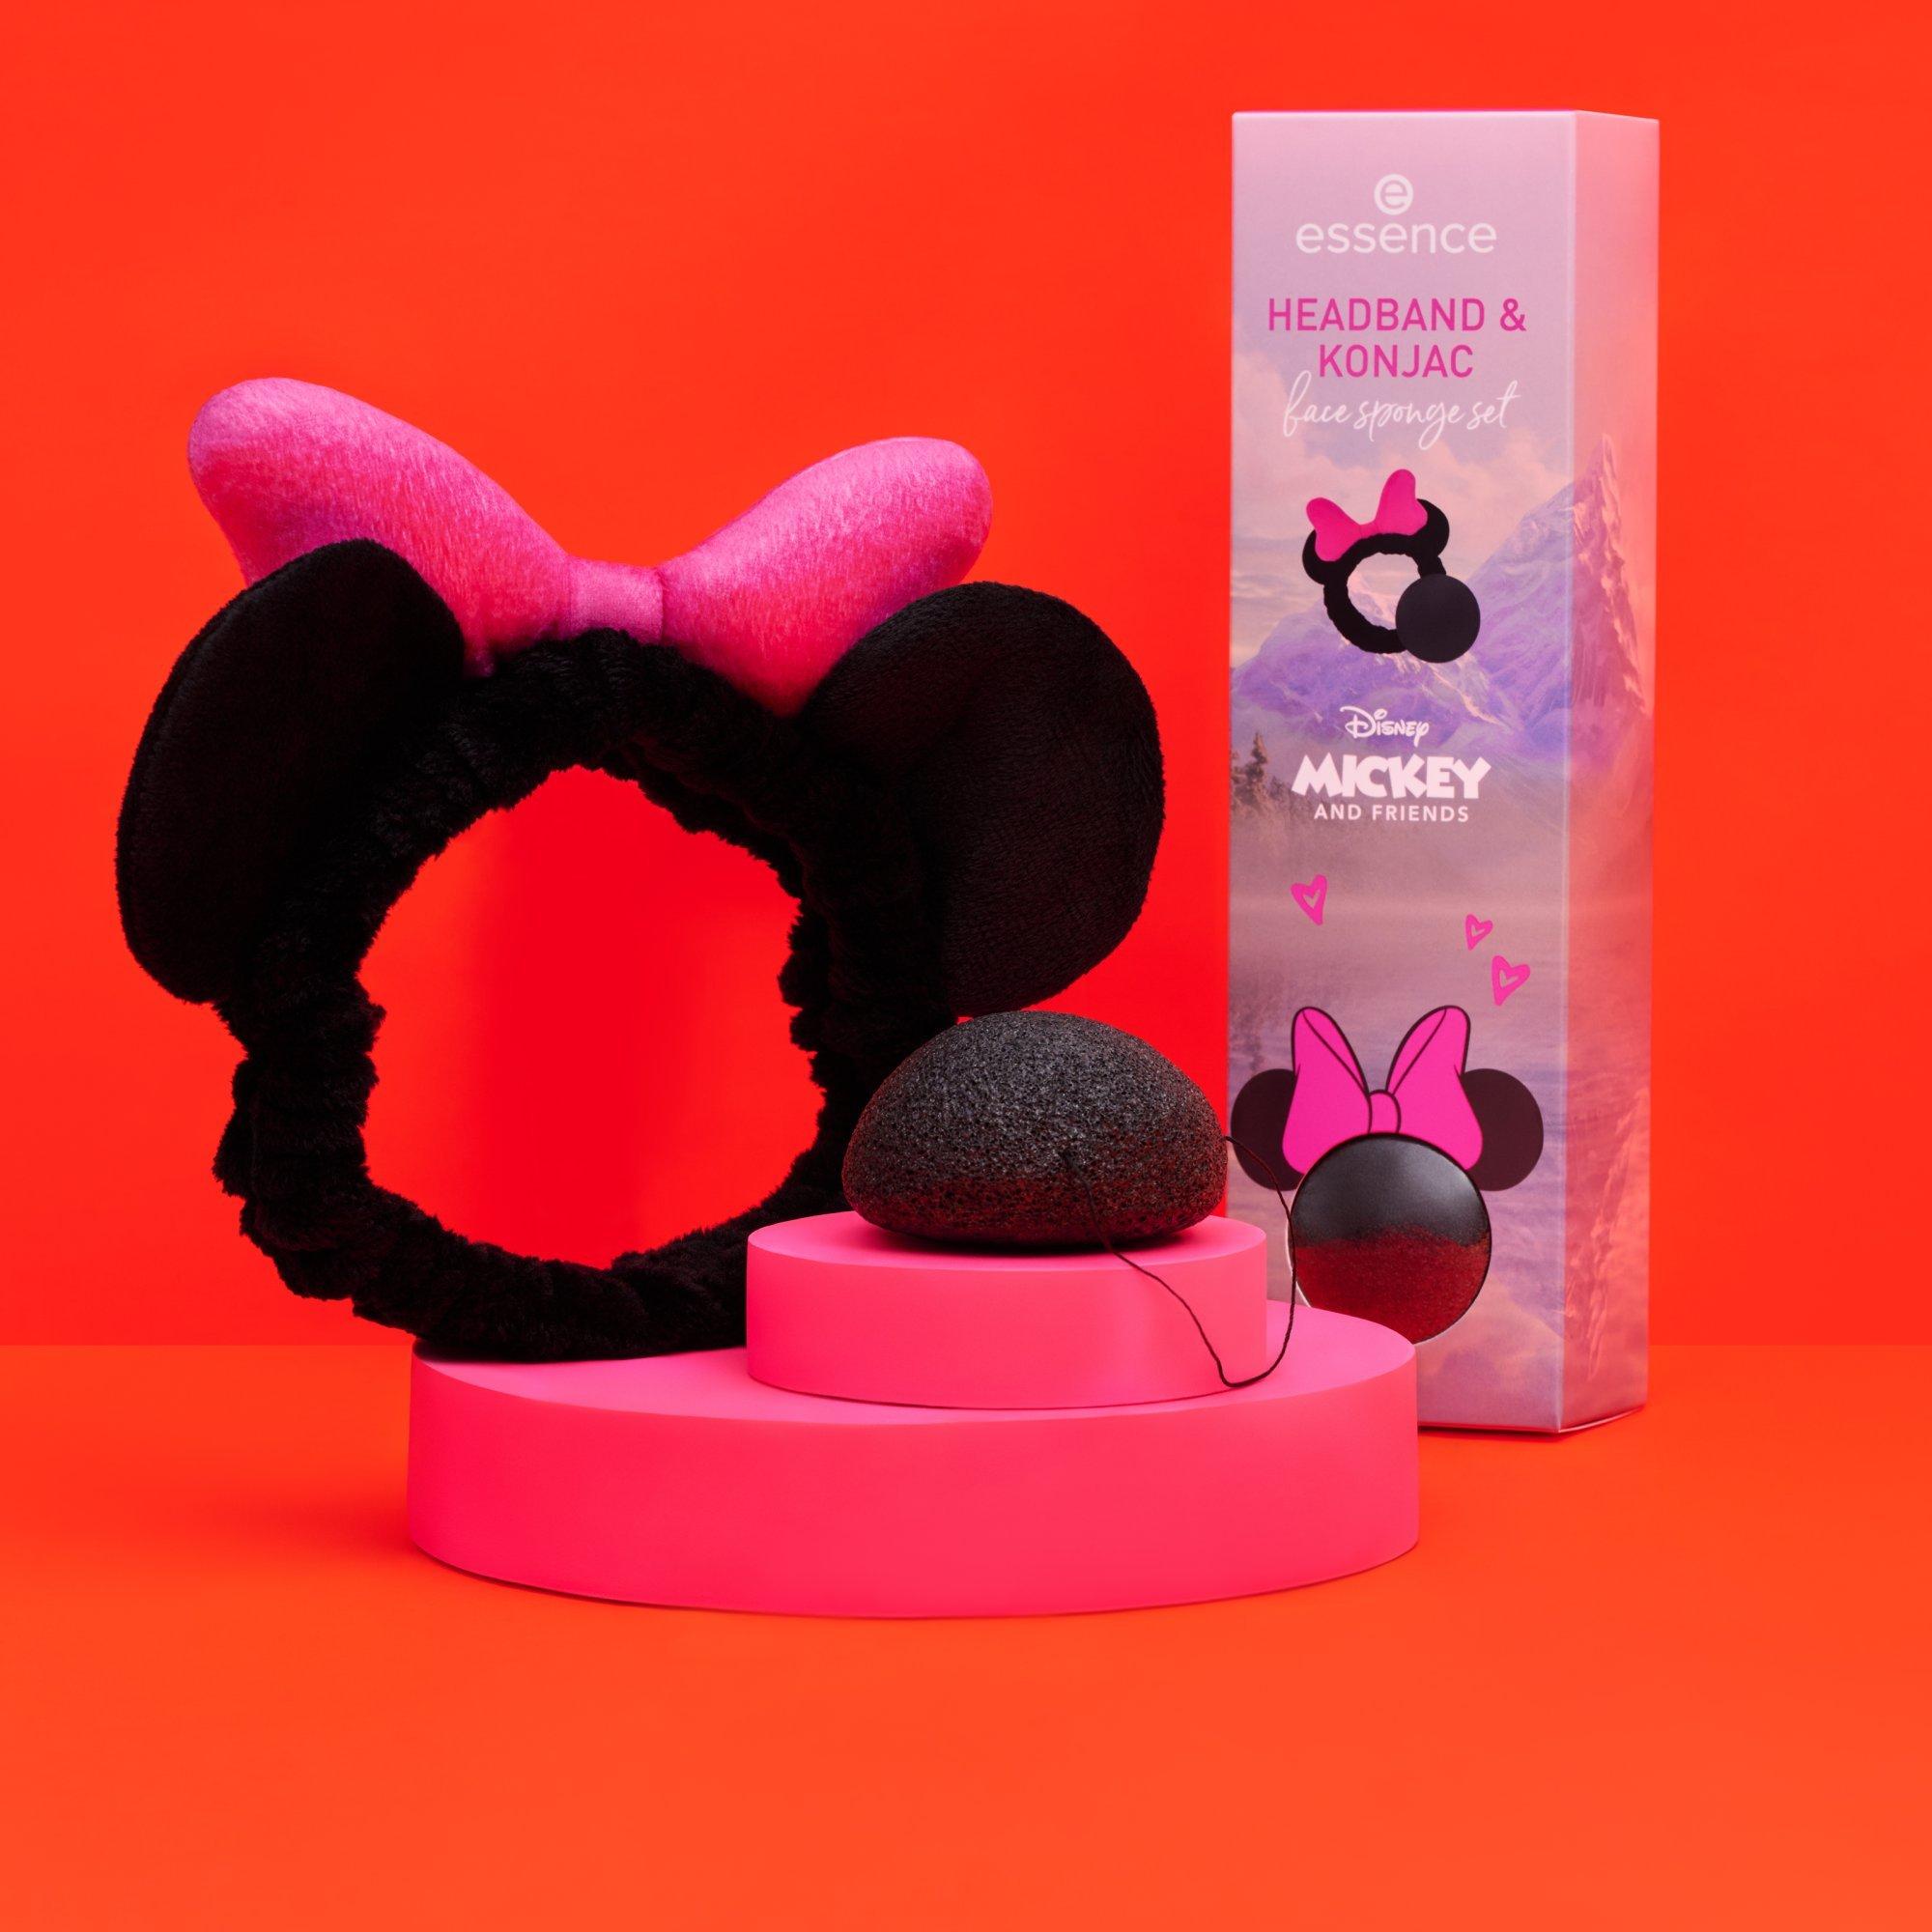 Disney Mickey and Friends headband and konjac face sponge set